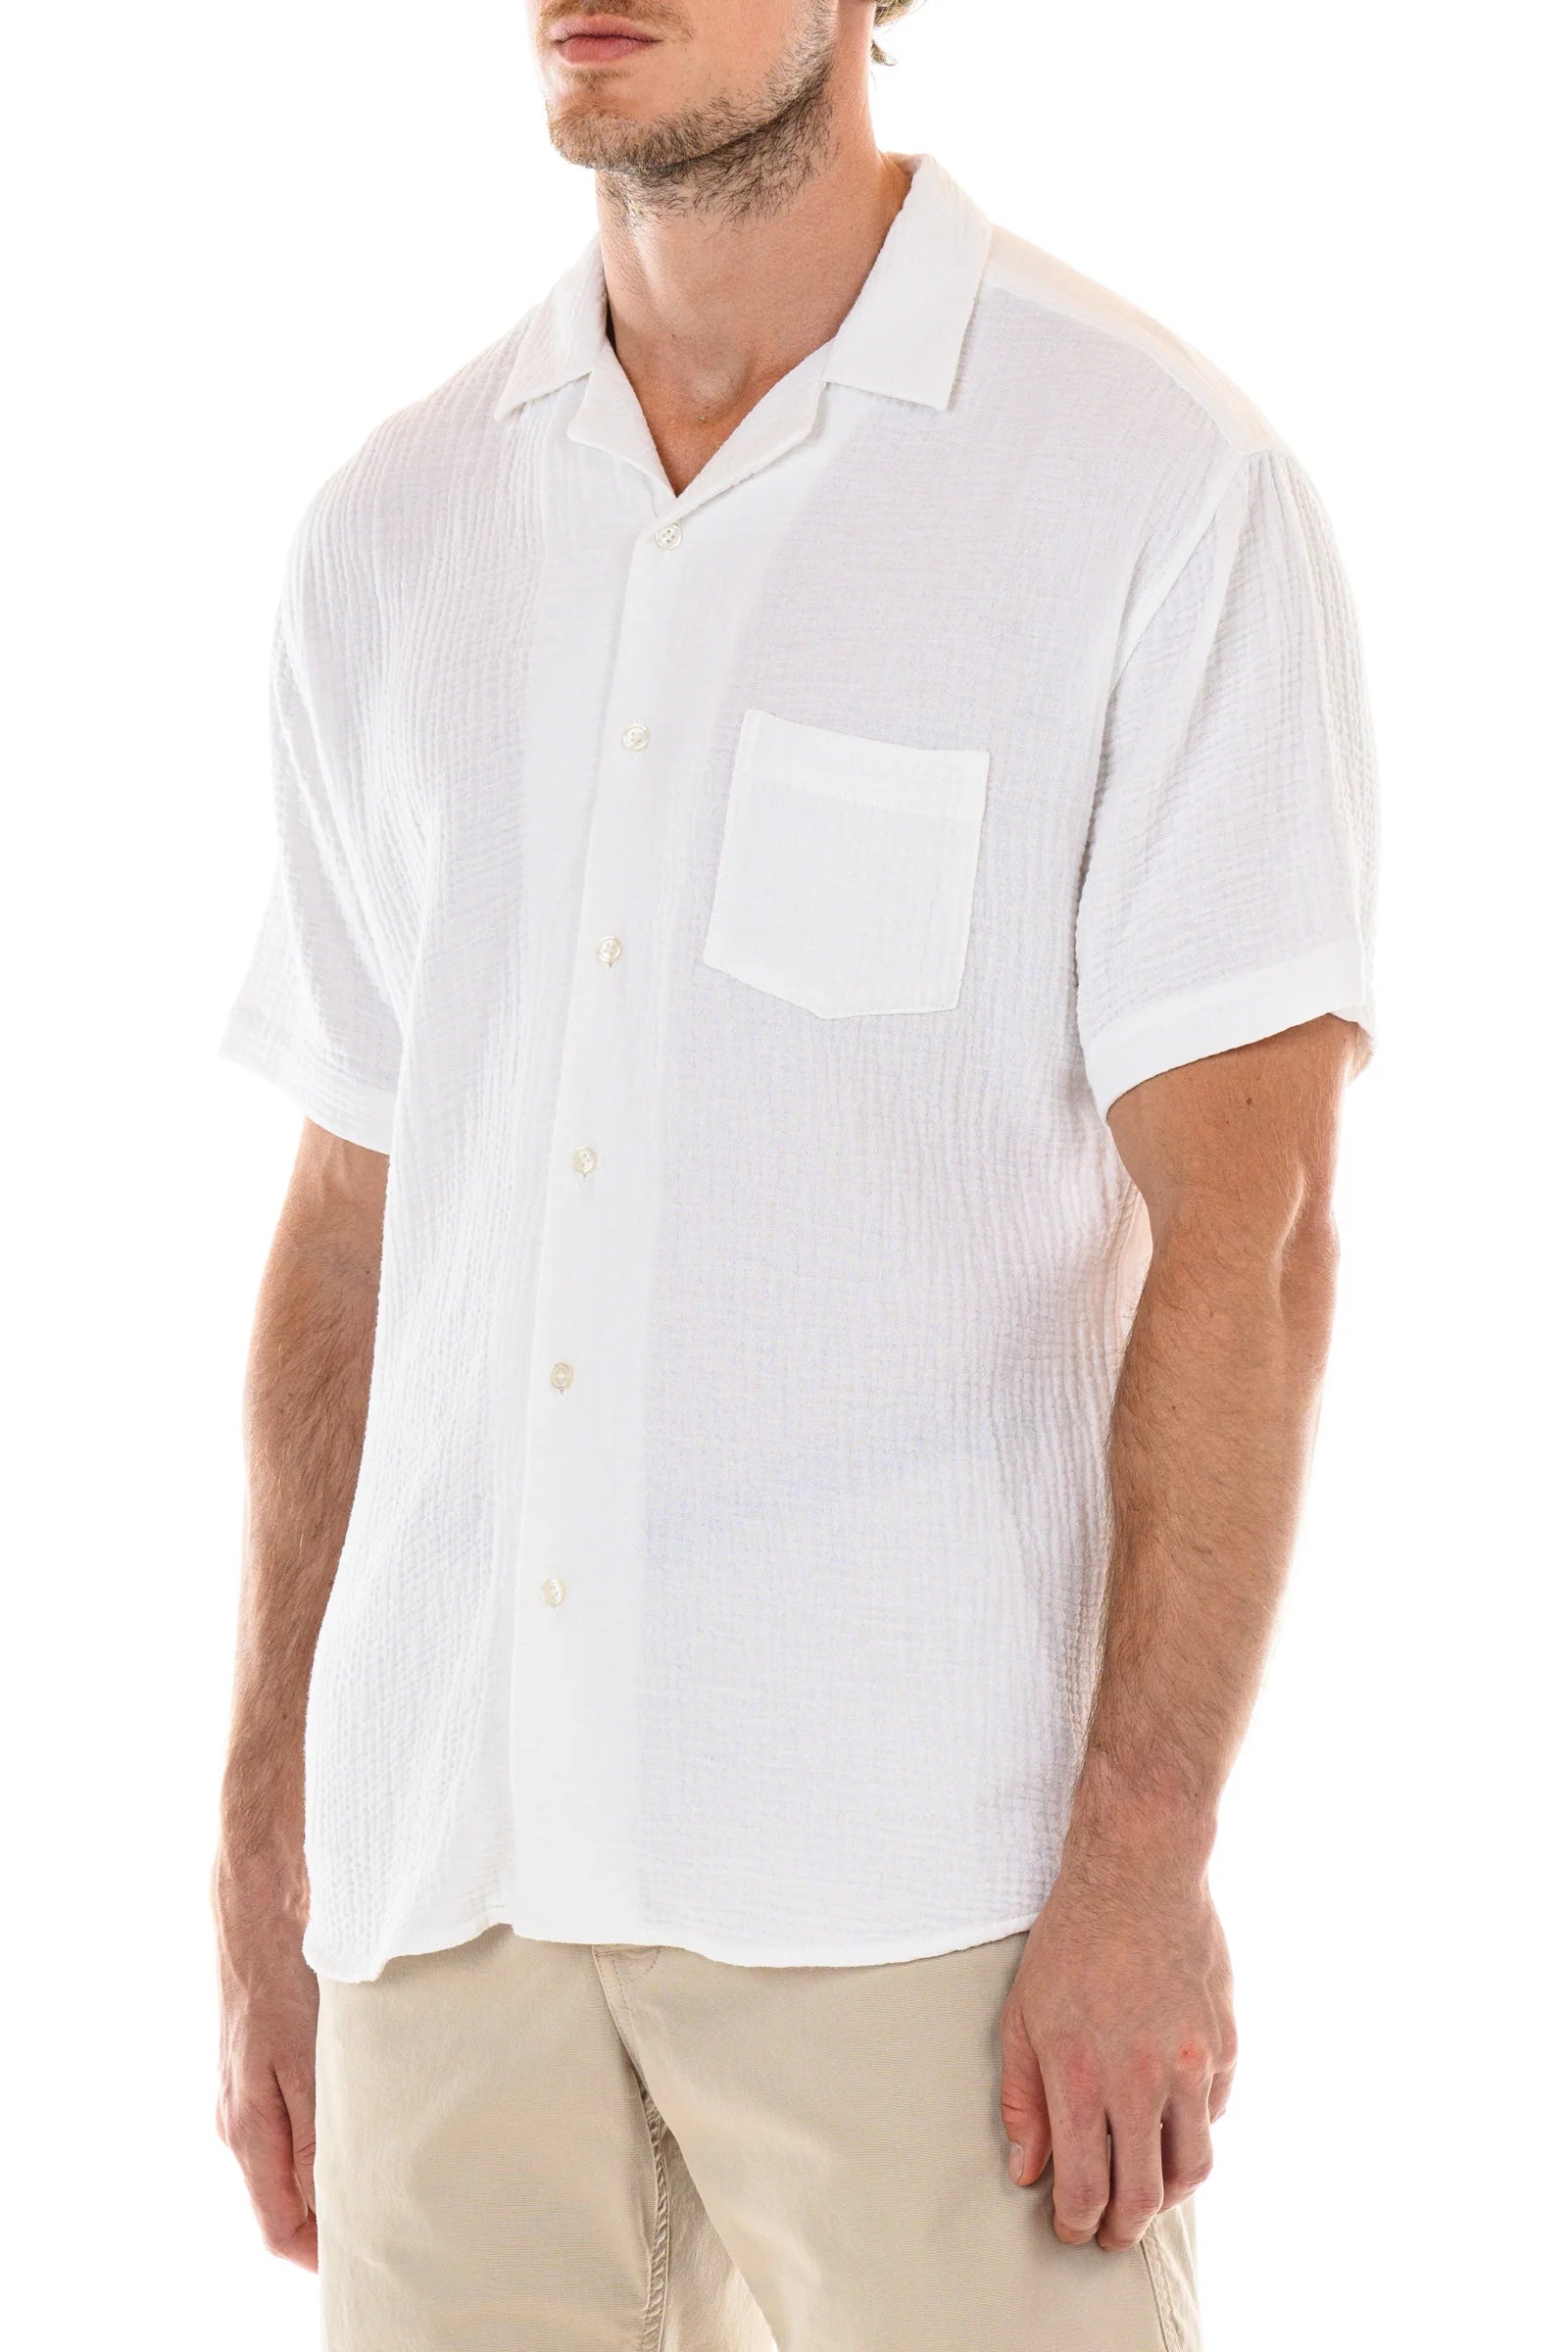 OP Morro Bay short sleeve shirt white